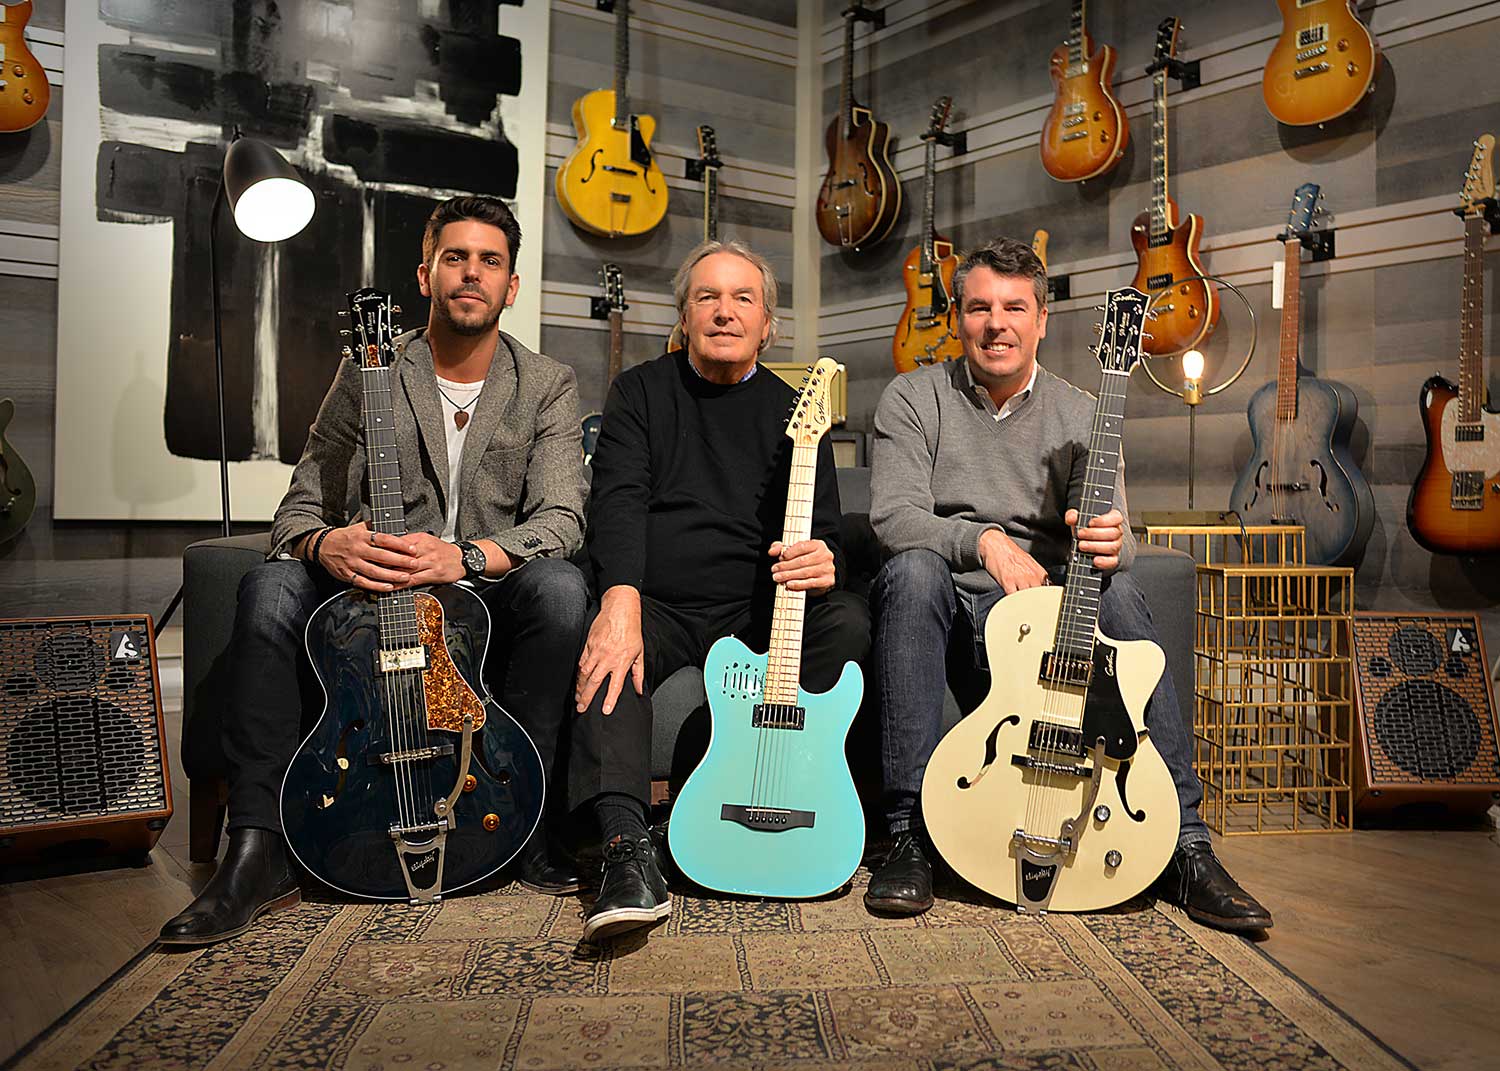 Robert Godin's lifetime building guitars with BONUS factory tour